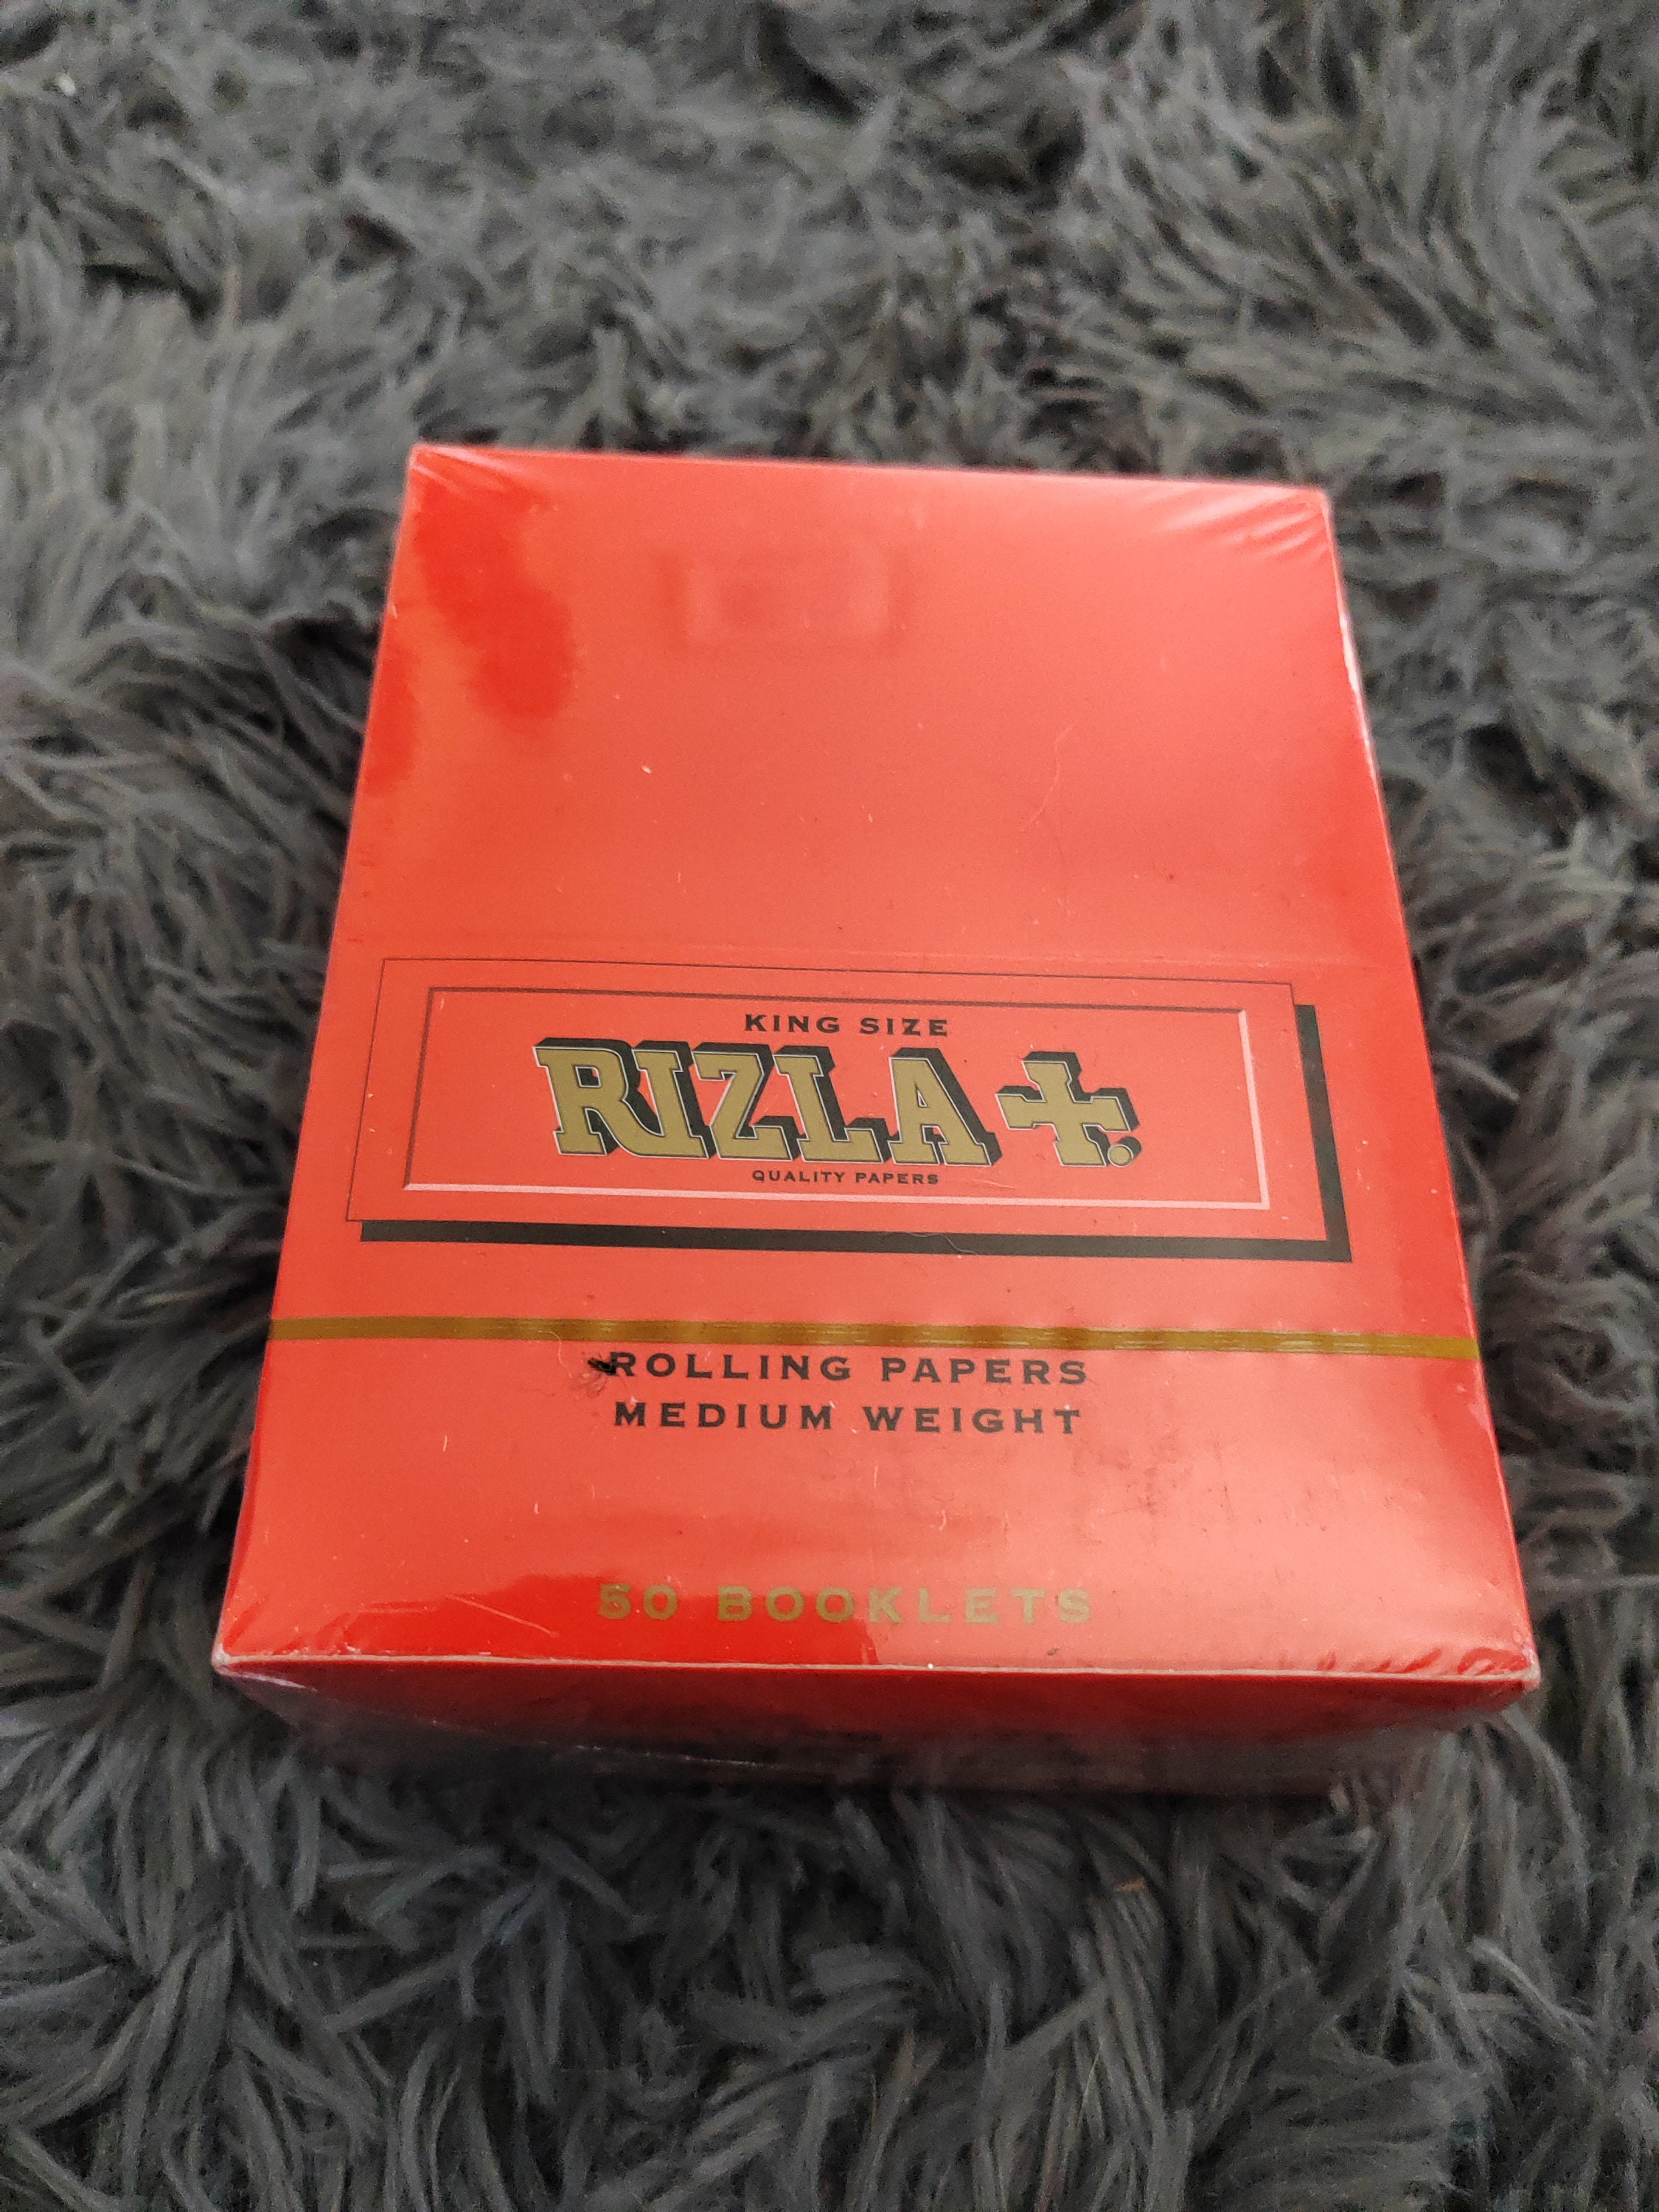 Rizla Micron Kingsize Rolling Papers Single Pack, Buy Online